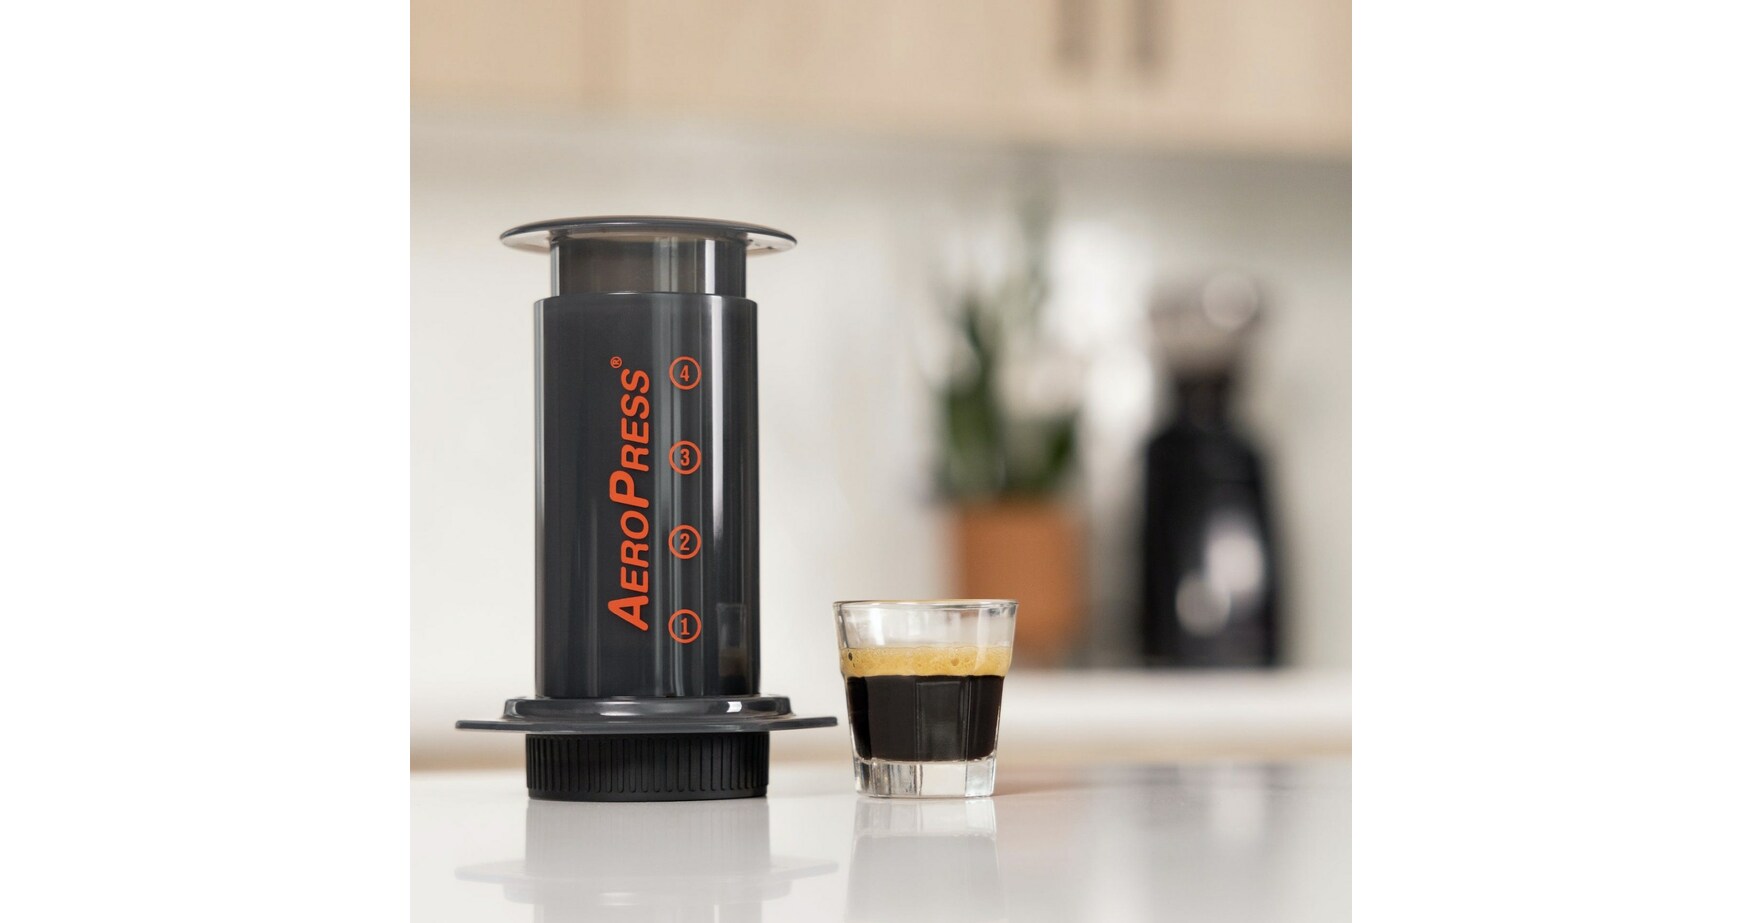 AeroPress Coffee Maker Review: The Perfect Travel Companion